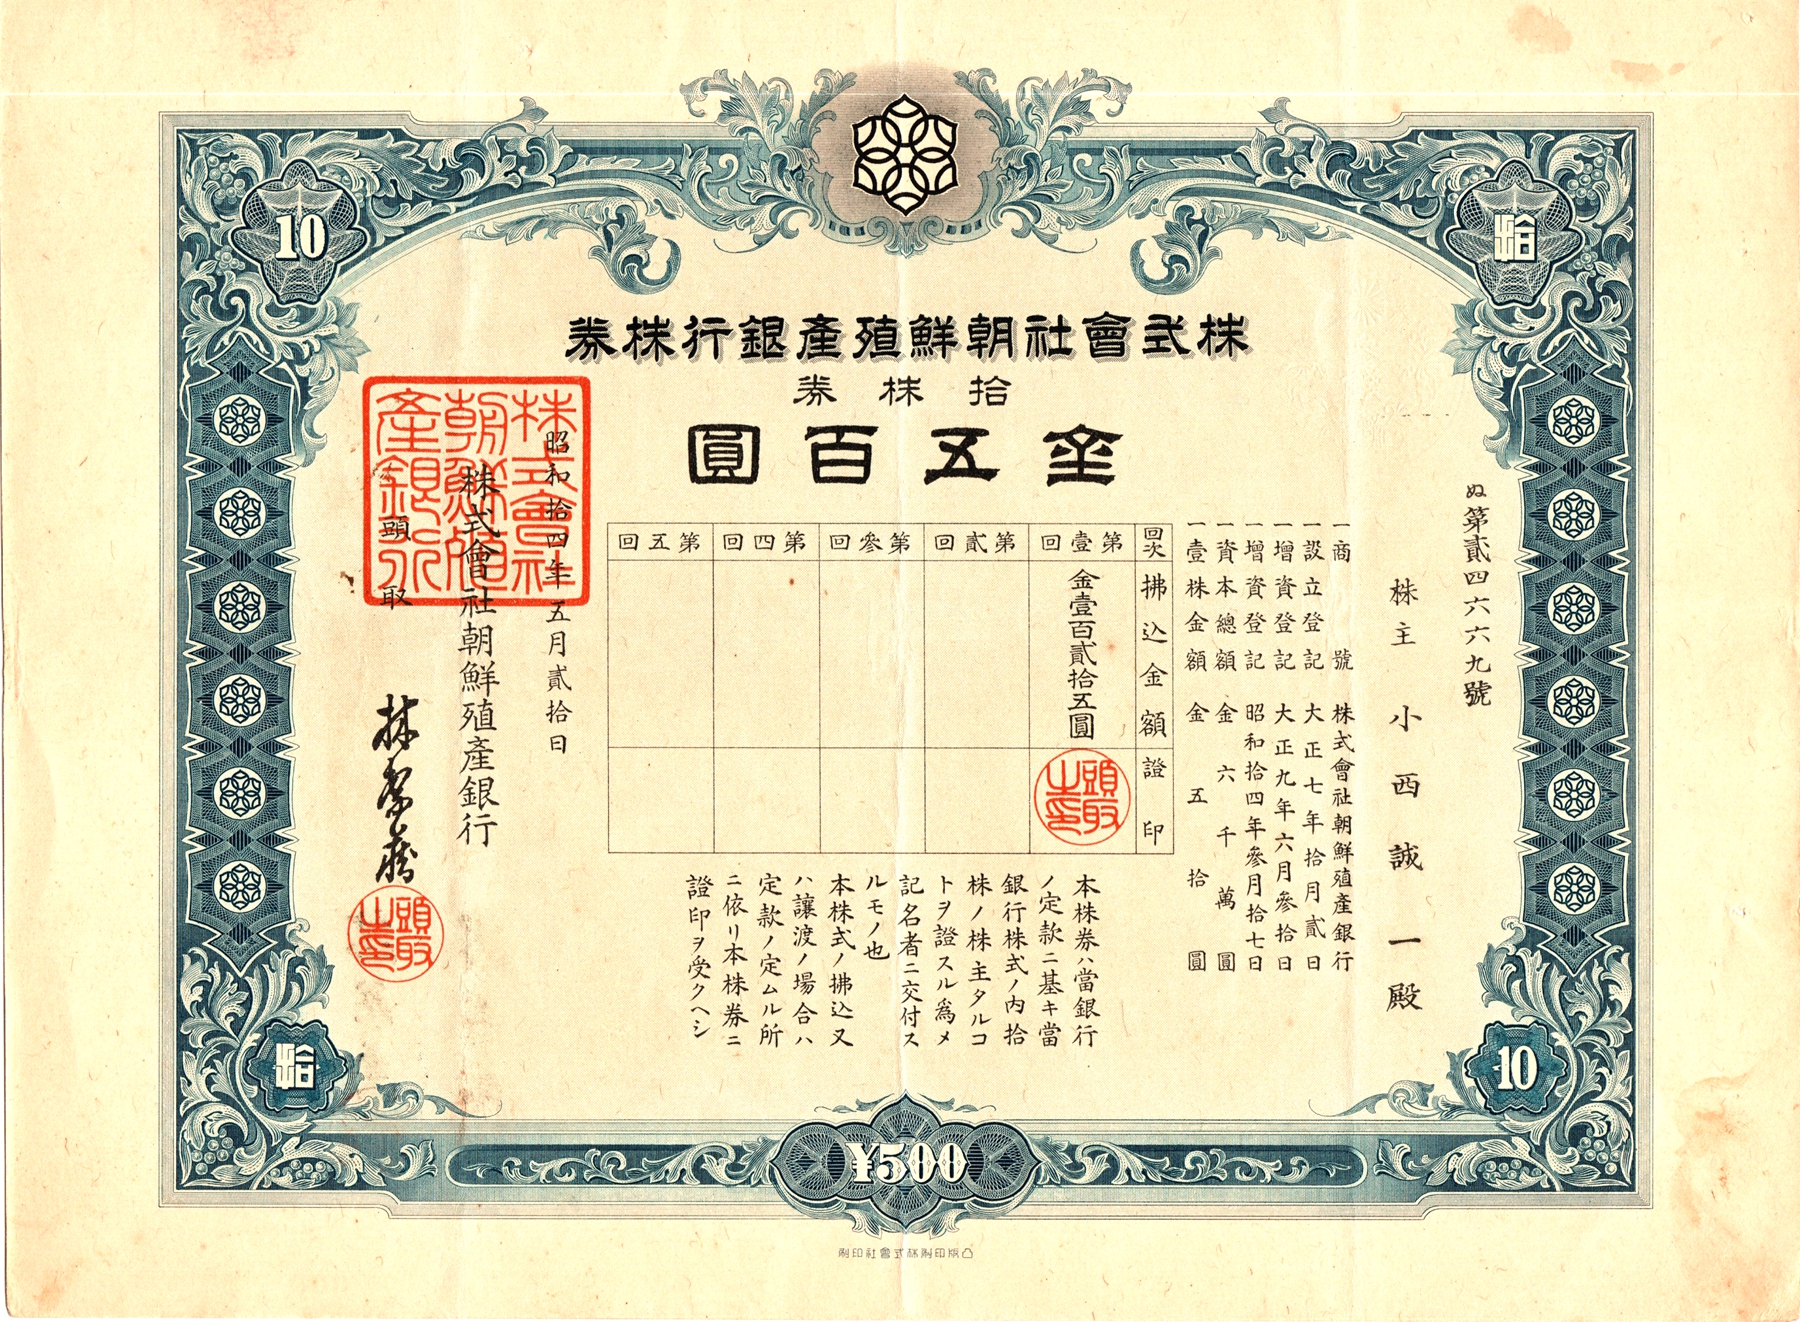 S4153, Korea Colony Industry Bank Co., Ltd, Stock Certificate 10 Shares, 1939